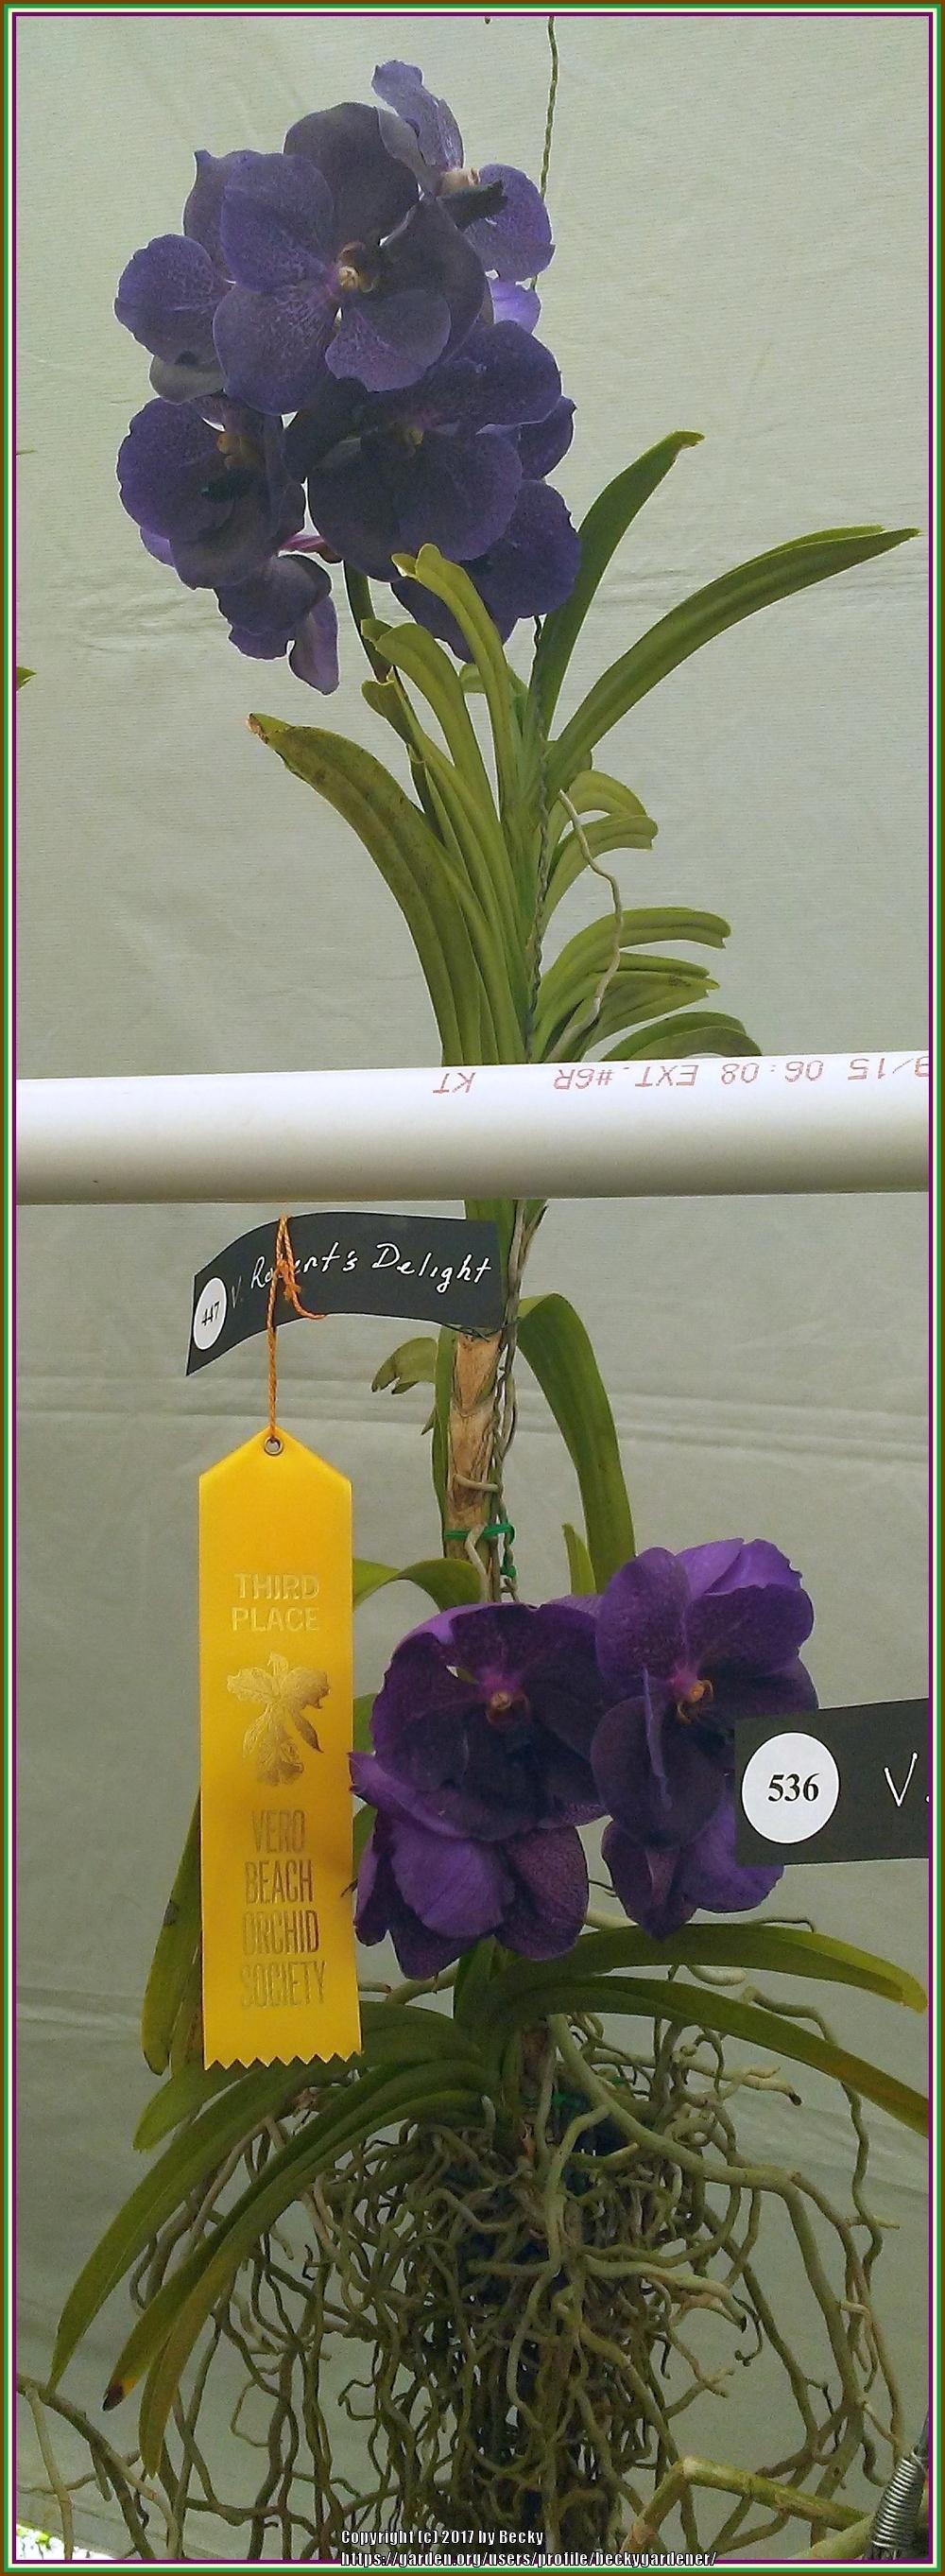 Photo of Orchid (Vanda Robert's Delight) uploaded by beckygardener